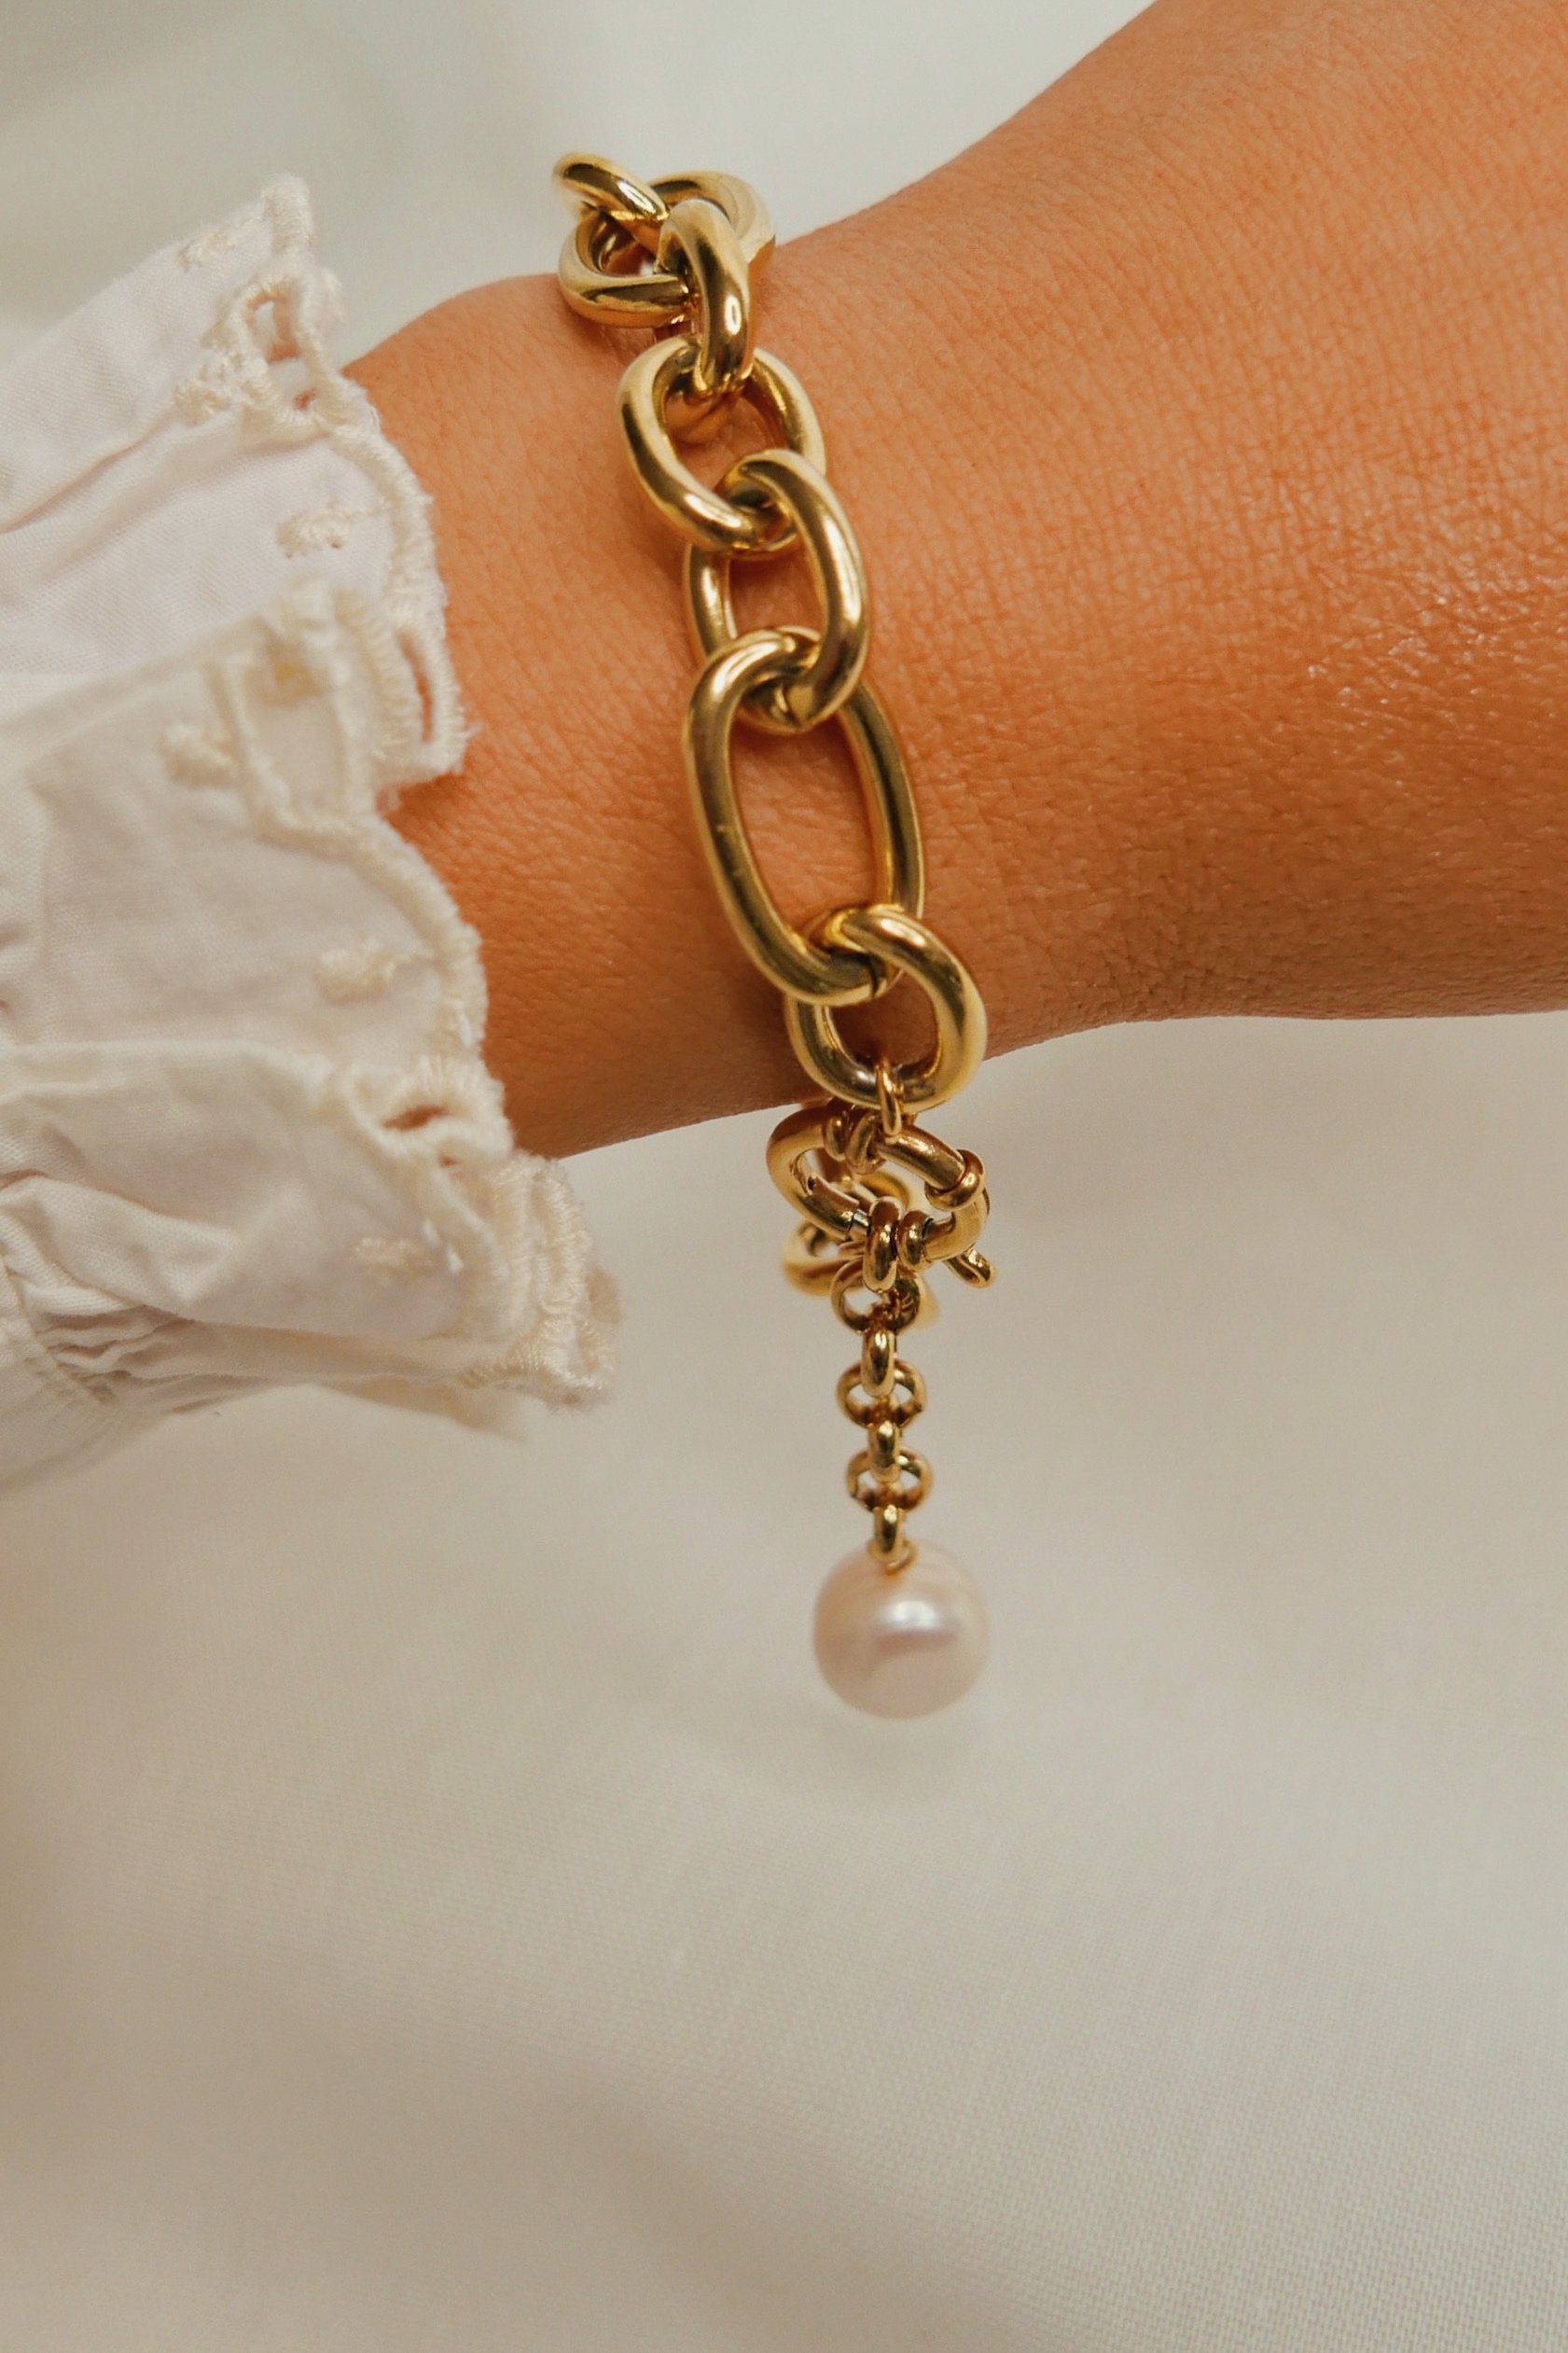 Sunlight Bracelet - Boutique Minimaliste has waterproof, durable, elegant and vintage inspired jewelry